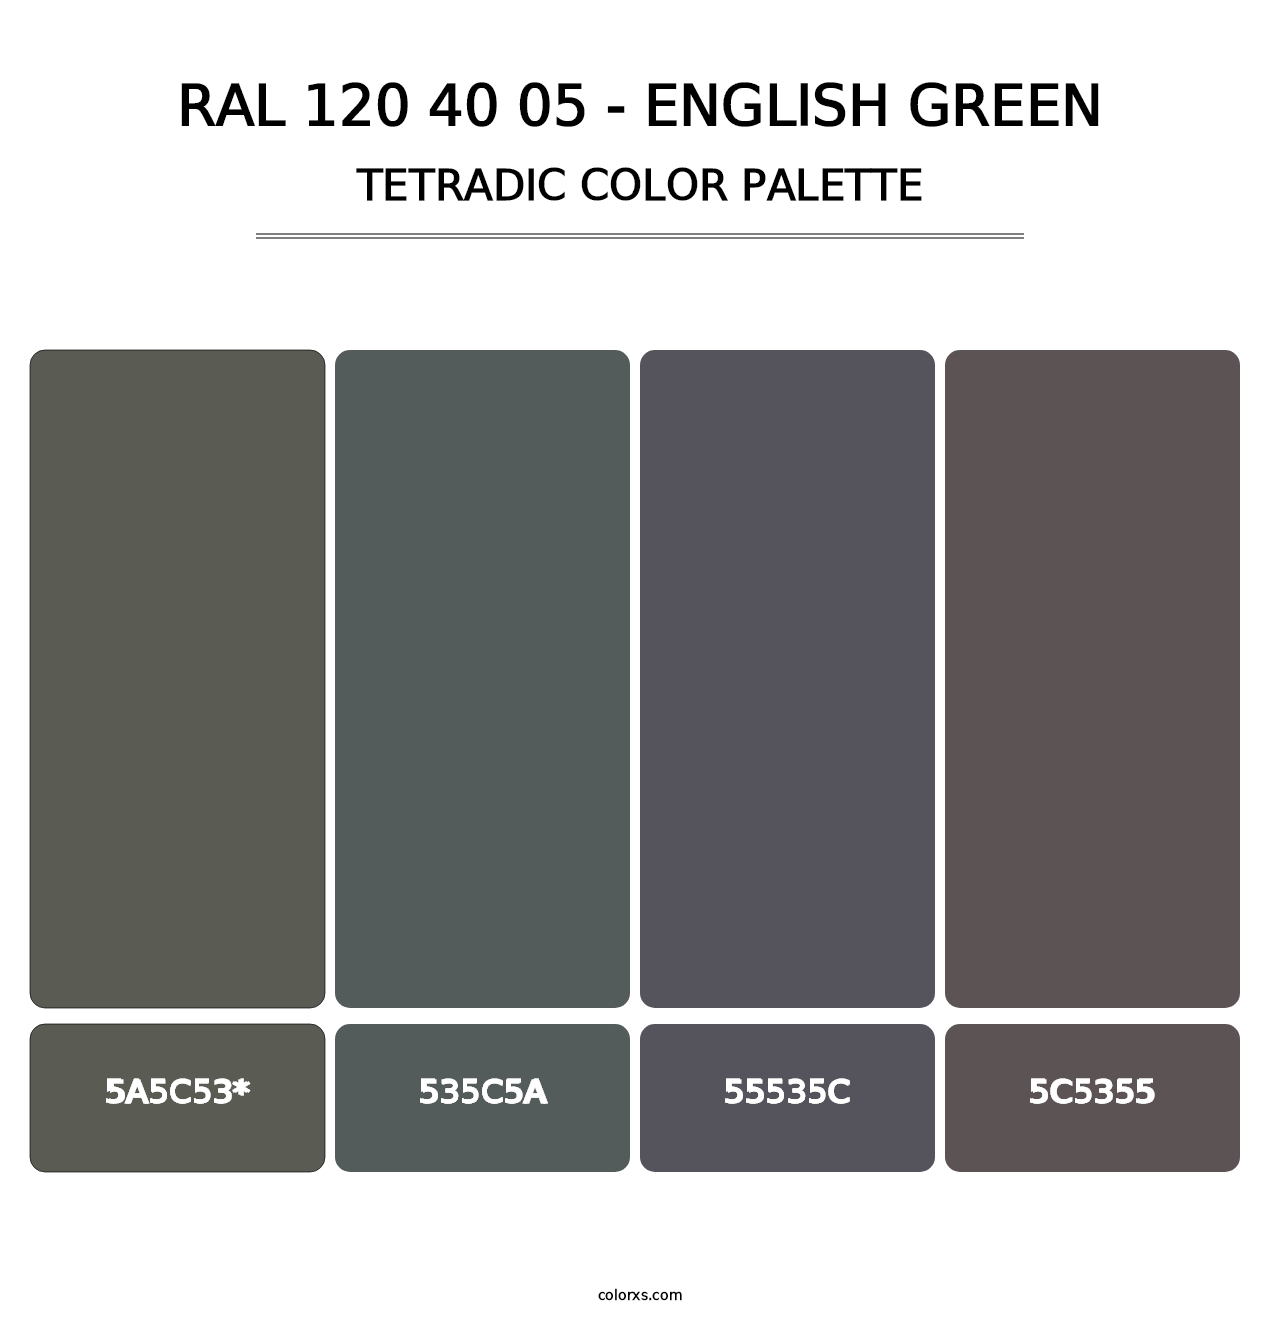 RAL 120 40 05 - English Green - Tetradic Color Palette